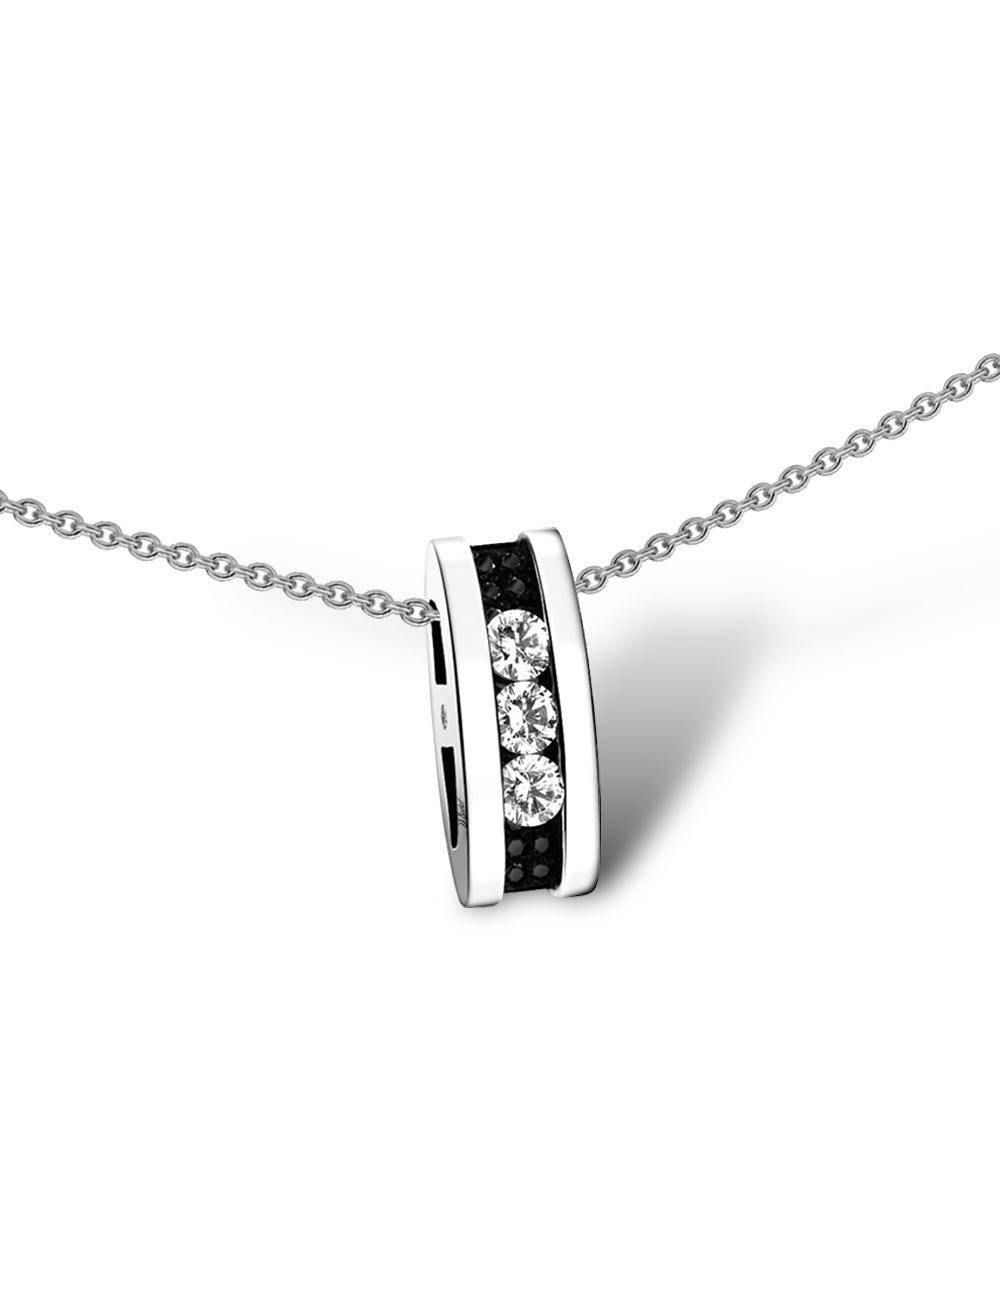 Iconic Trilogy Pendant: 0.15ct diamonds, chic white gold/black contrast, pure elegance.